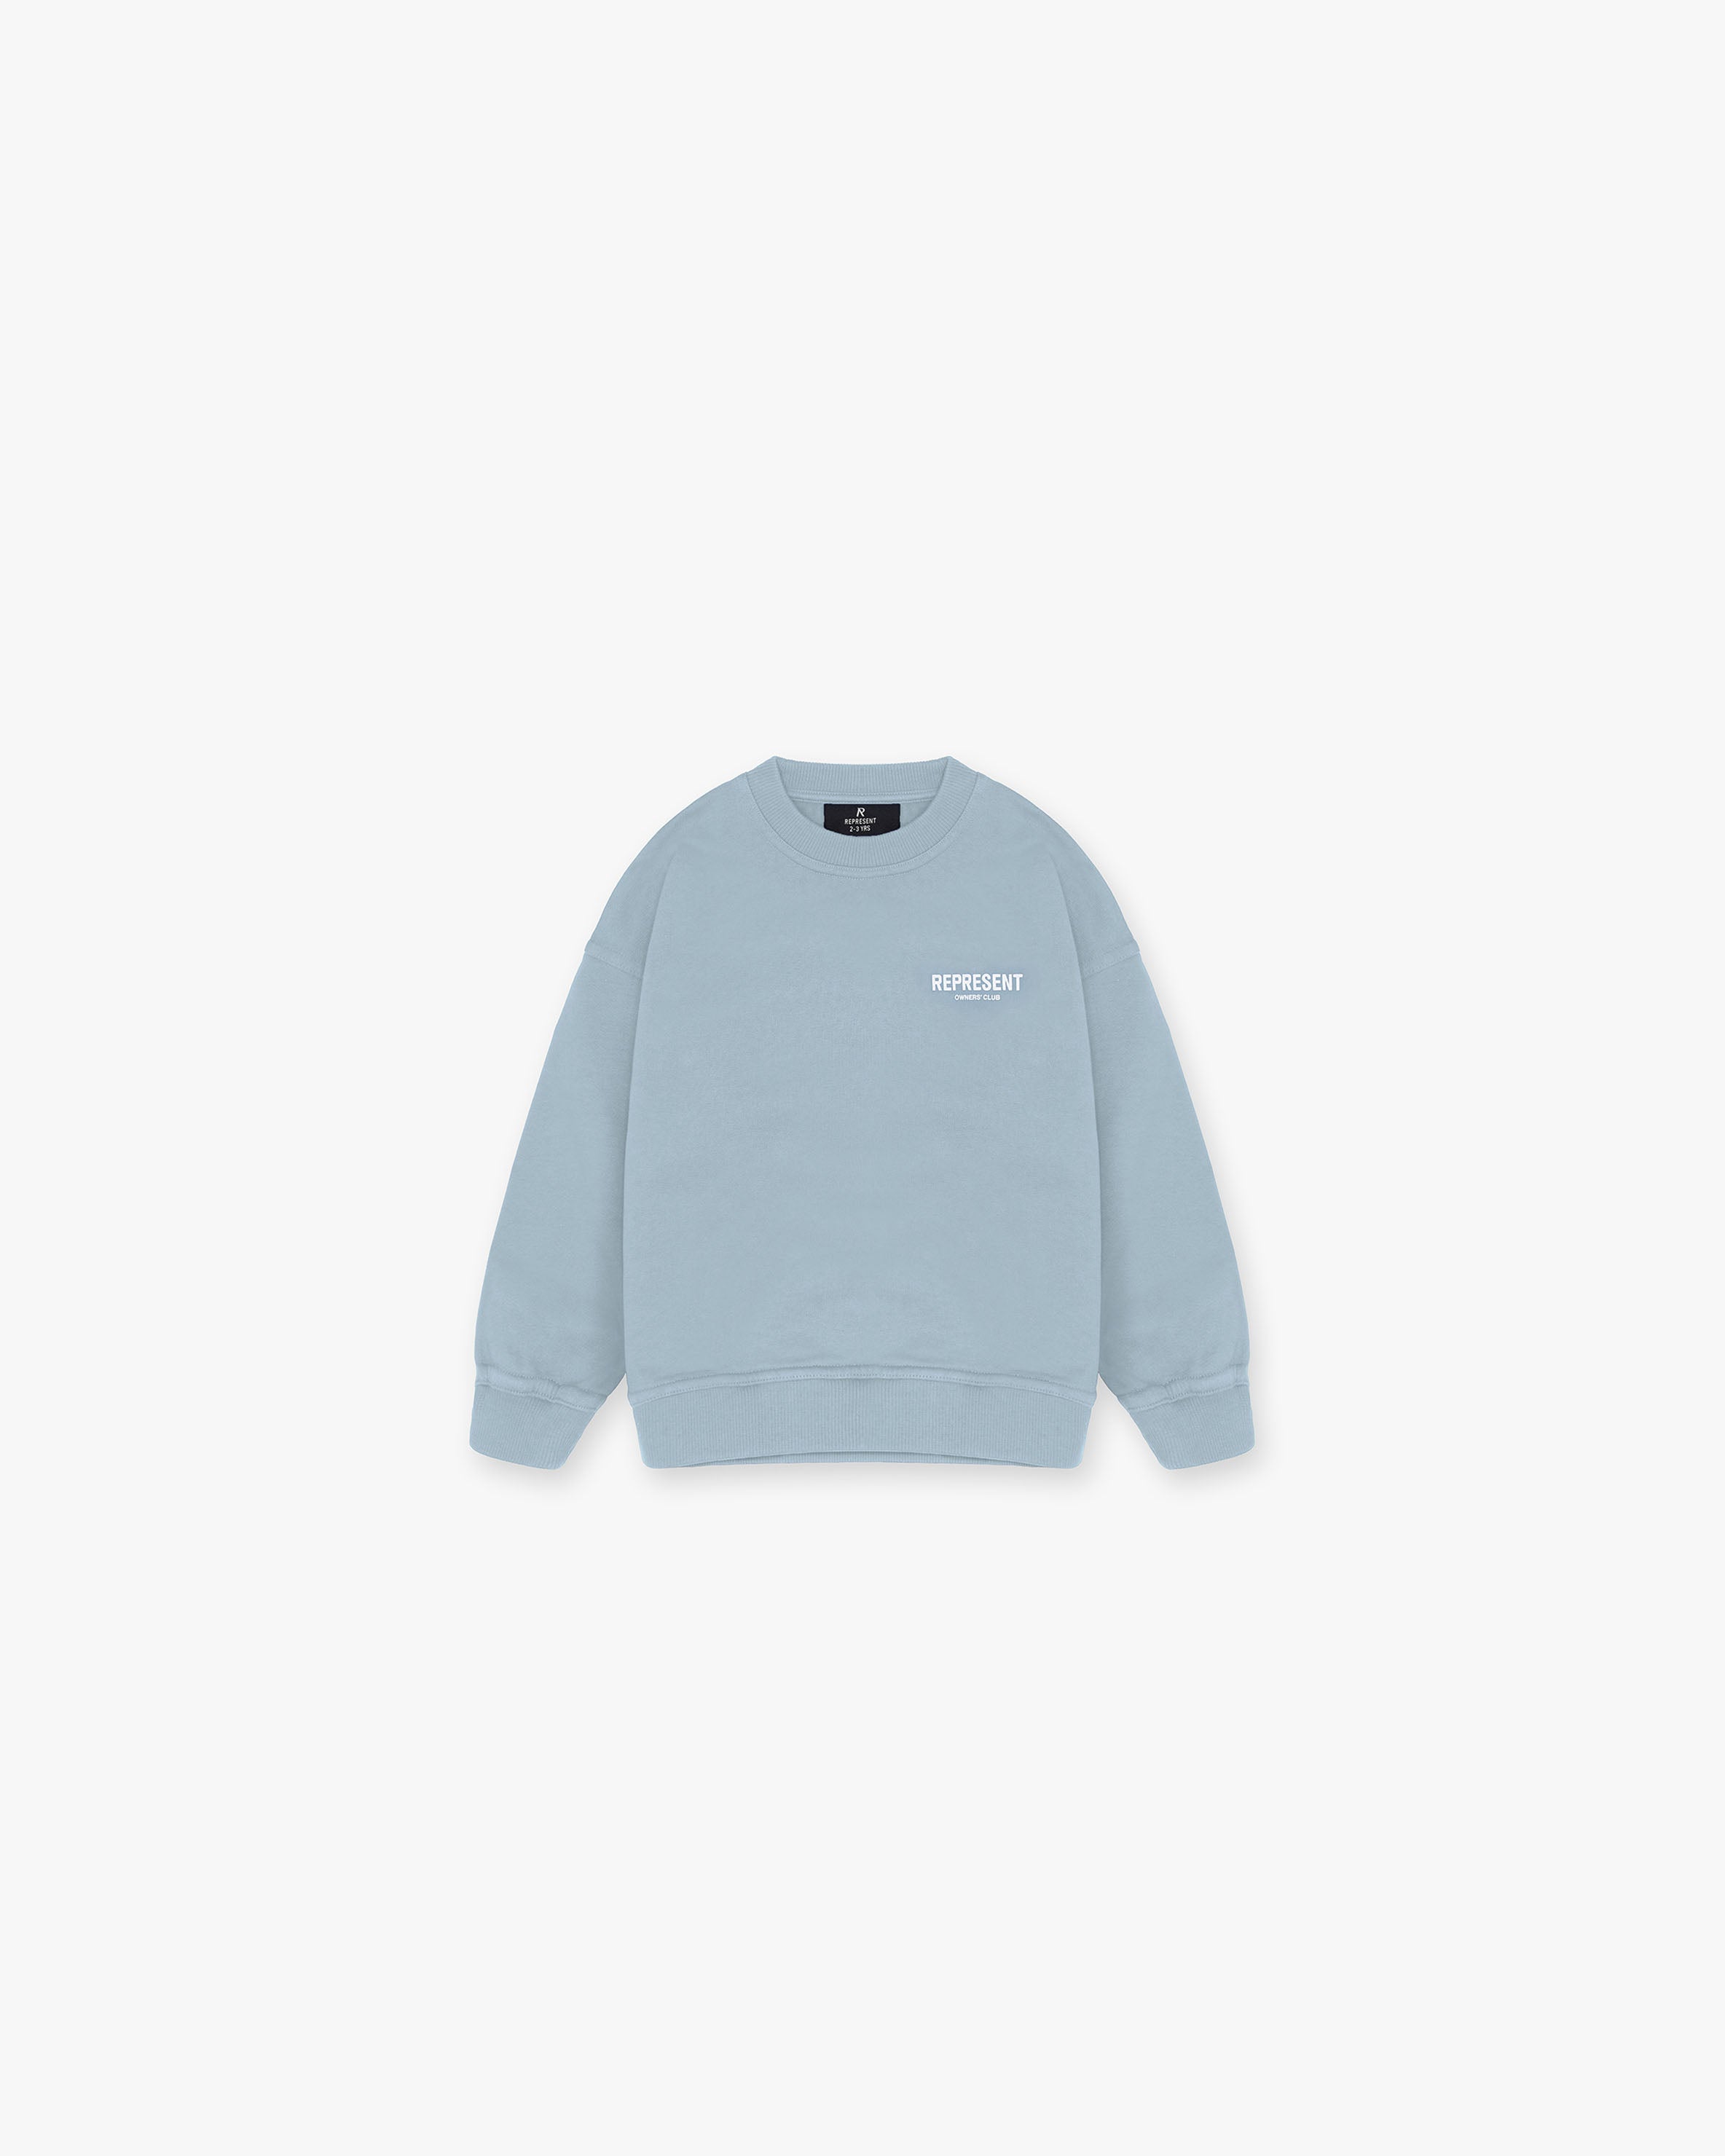 Represent Mini Owners Club Sweater - Powder Blue